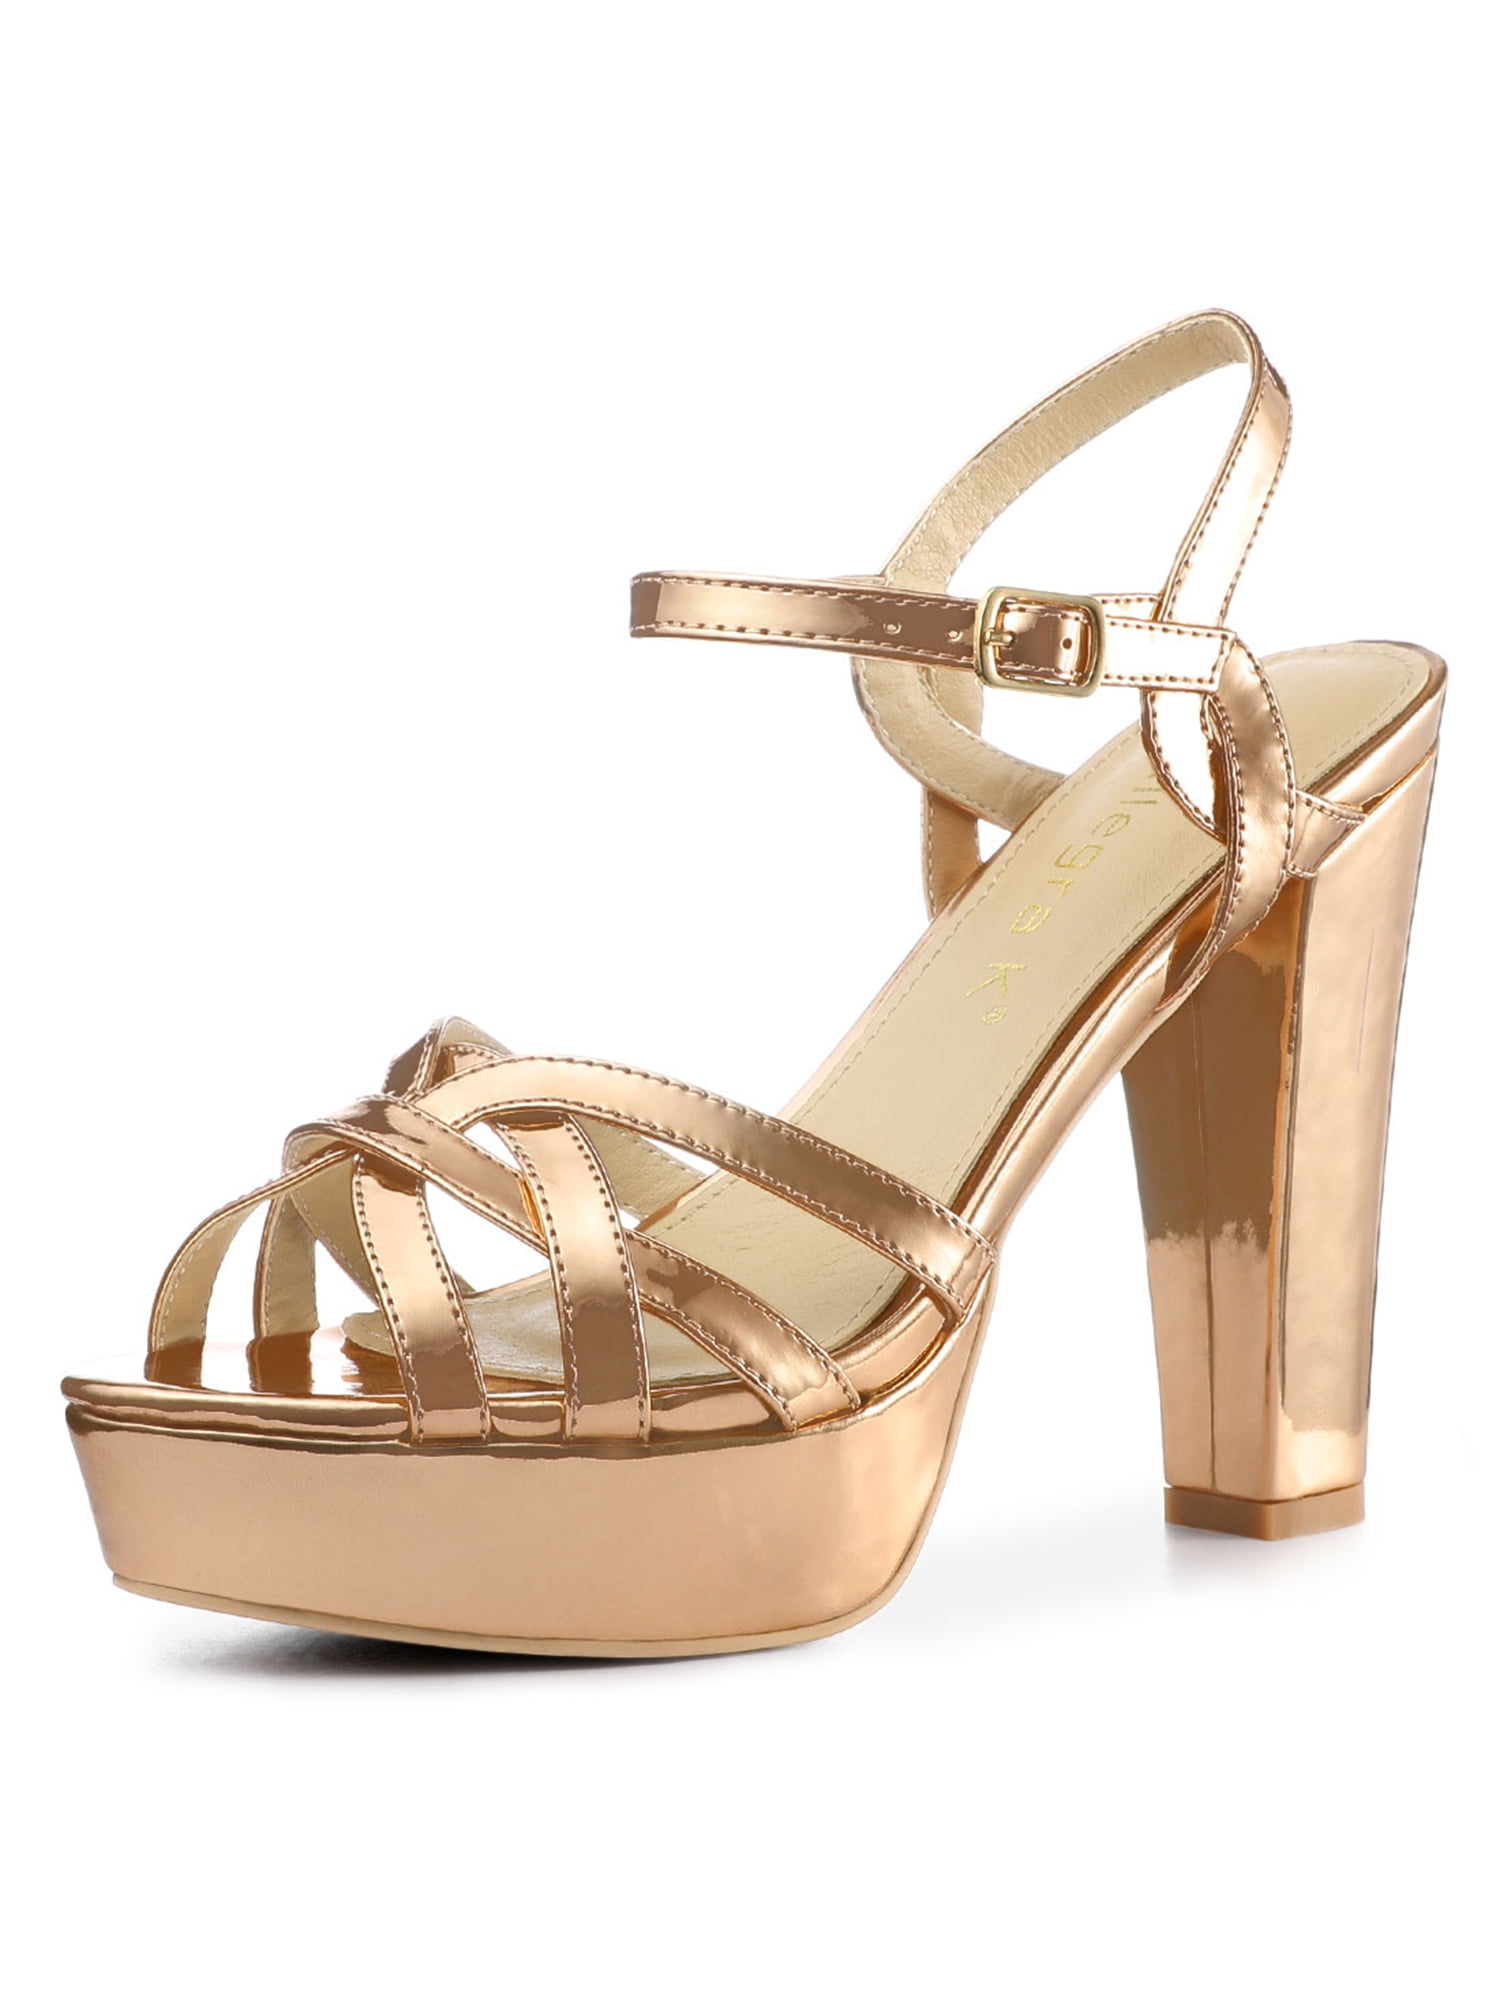 gold platform block heels